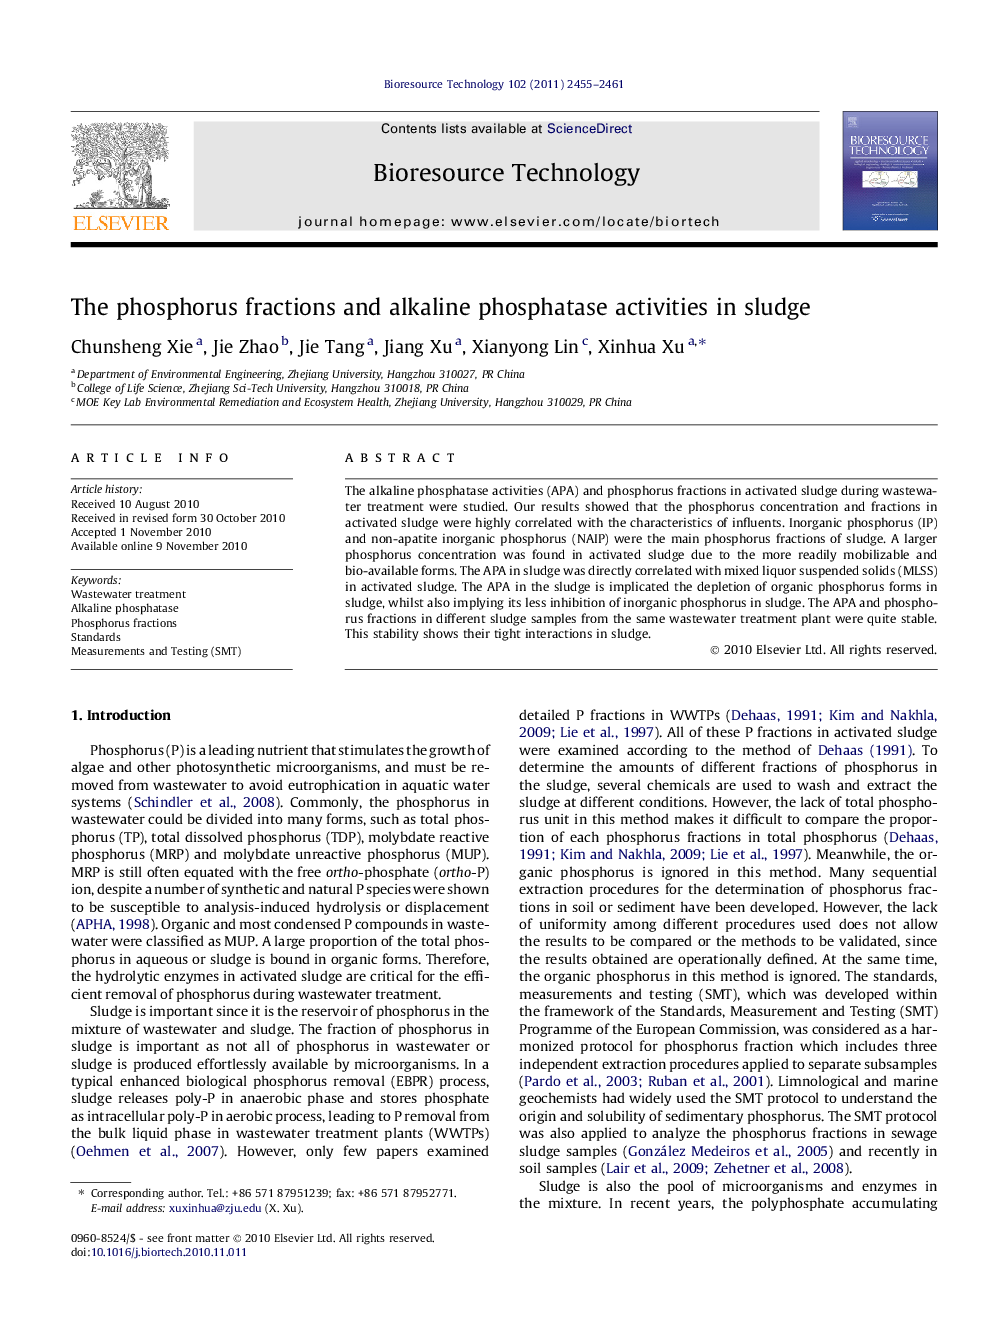 The phosphorus fractions and alkaline phosphatase activities in sludge